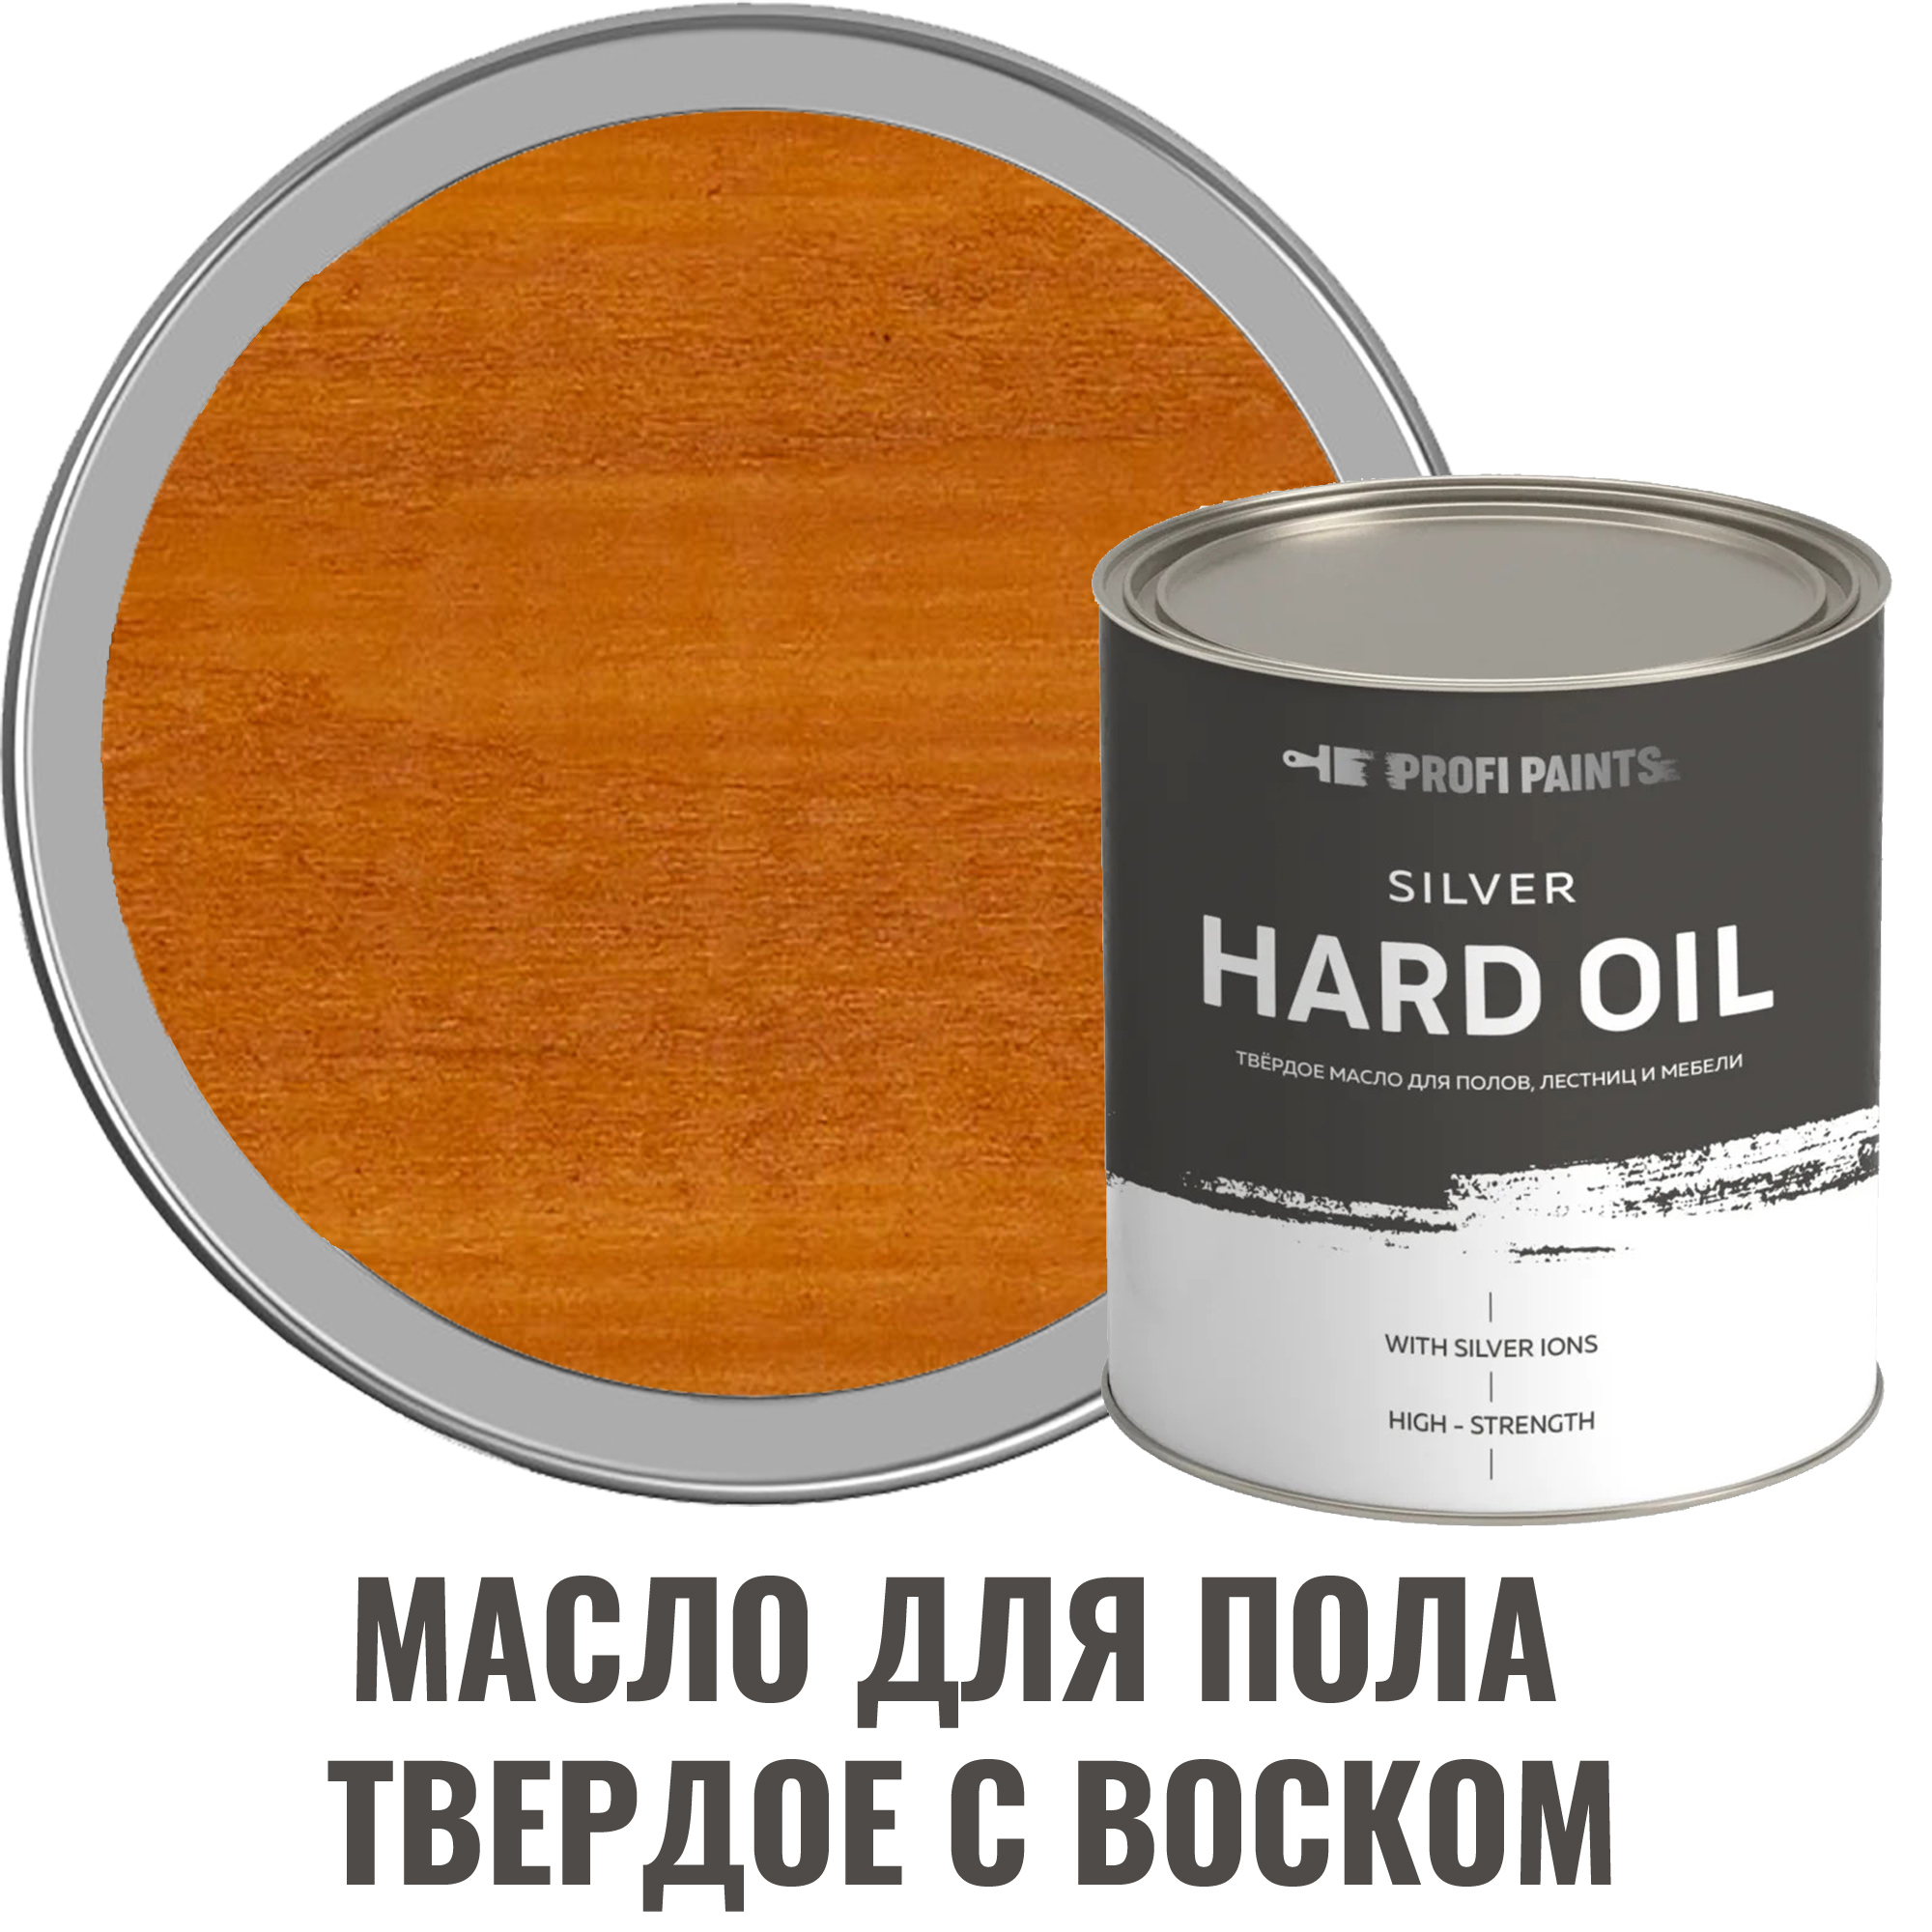 91095481 Масло для пола 10749_D Silver Hard Oil цвет золотой дуб 2.7 л STLM-0481838 PROFIPAINTS